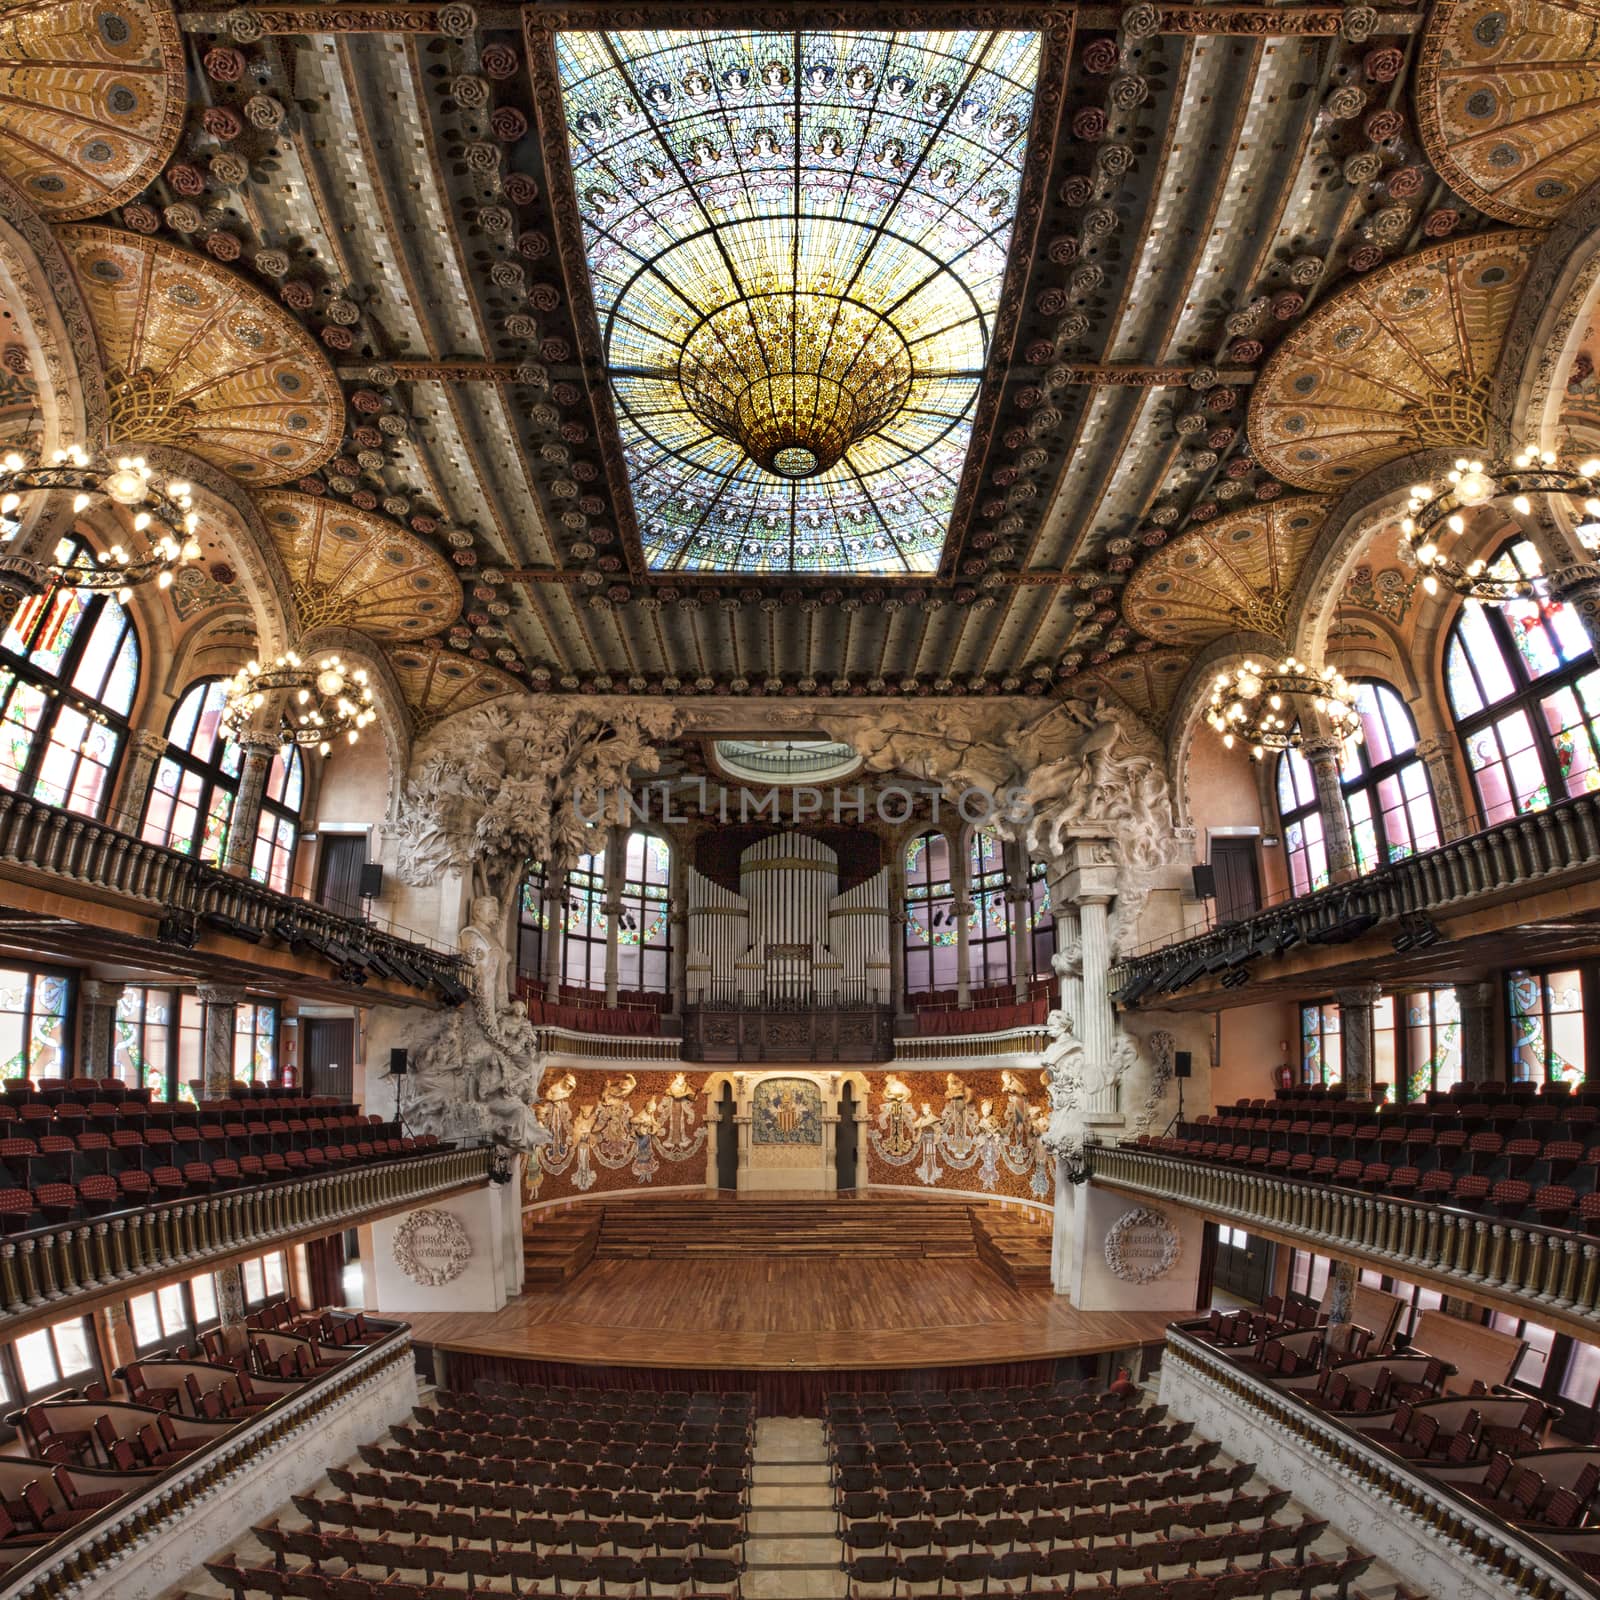 Hall at Palau de la musica catalana, Barcelona, Spain, 2014 by vlad-m